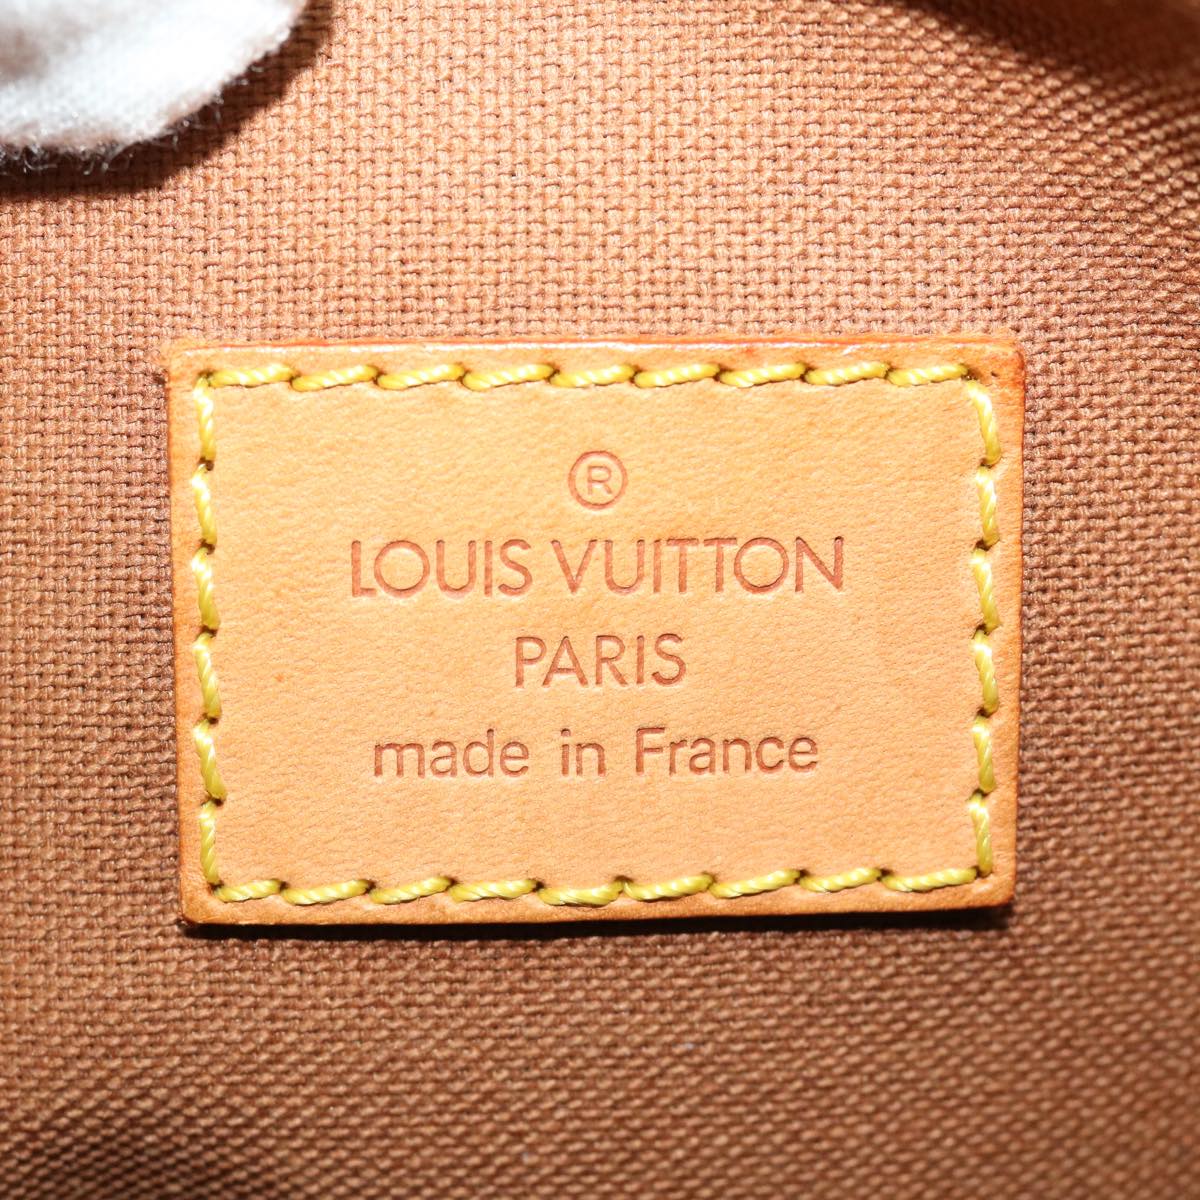 Louis Vuitton Vintage Louis Vuitton Isaac Mizrahi Clear Vinyl x